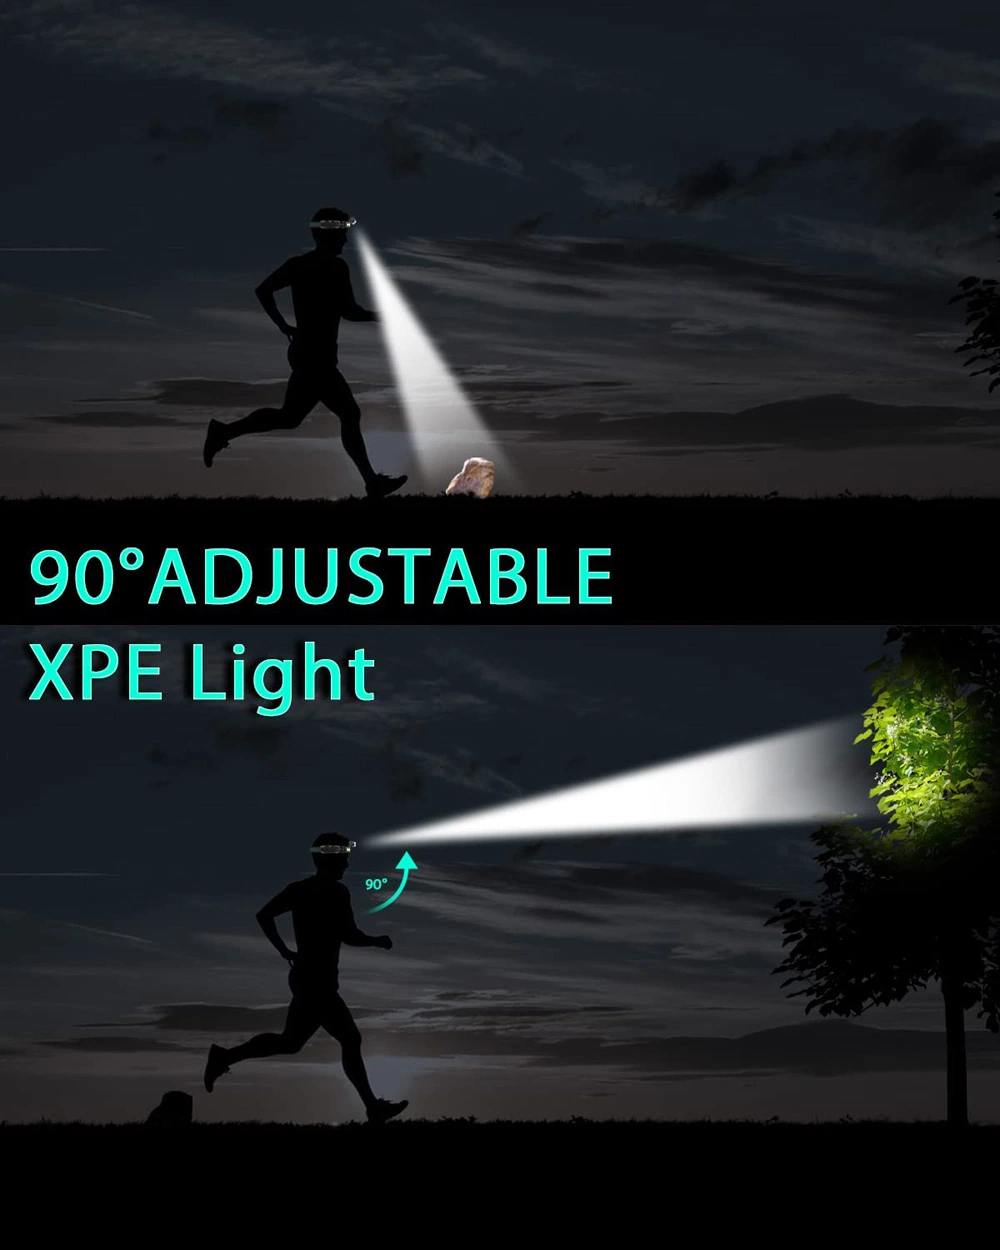 Induction LED Head Light Flashlight Headlamp RoHS Mining Head Torch with USB